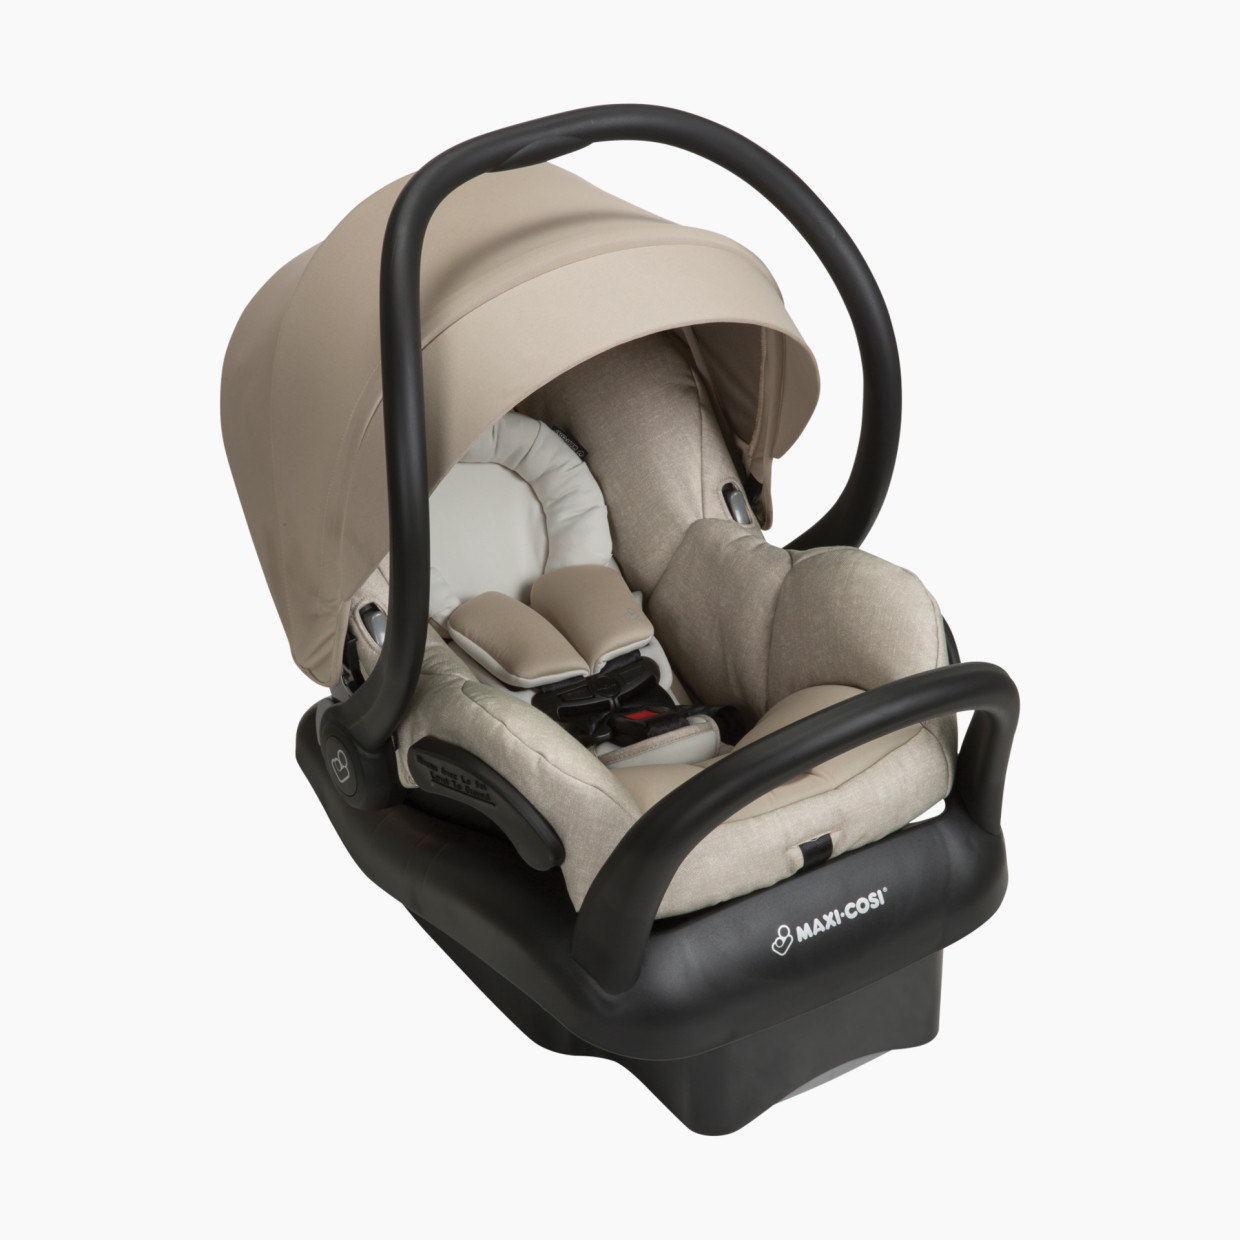 Maxi-Cosi Mico Max 30 Infant Car Seat - Nomad Sand.